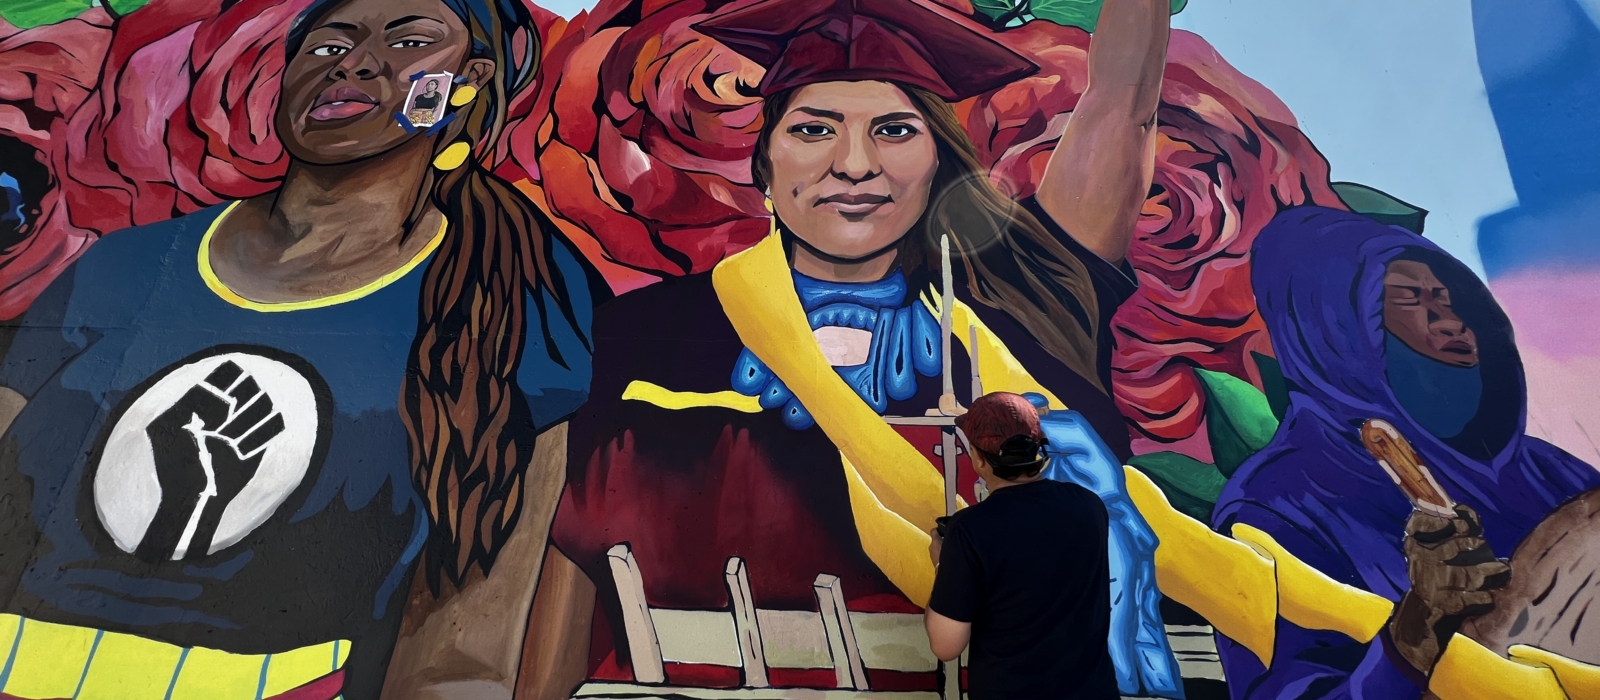 An artist paints a colorful mural.